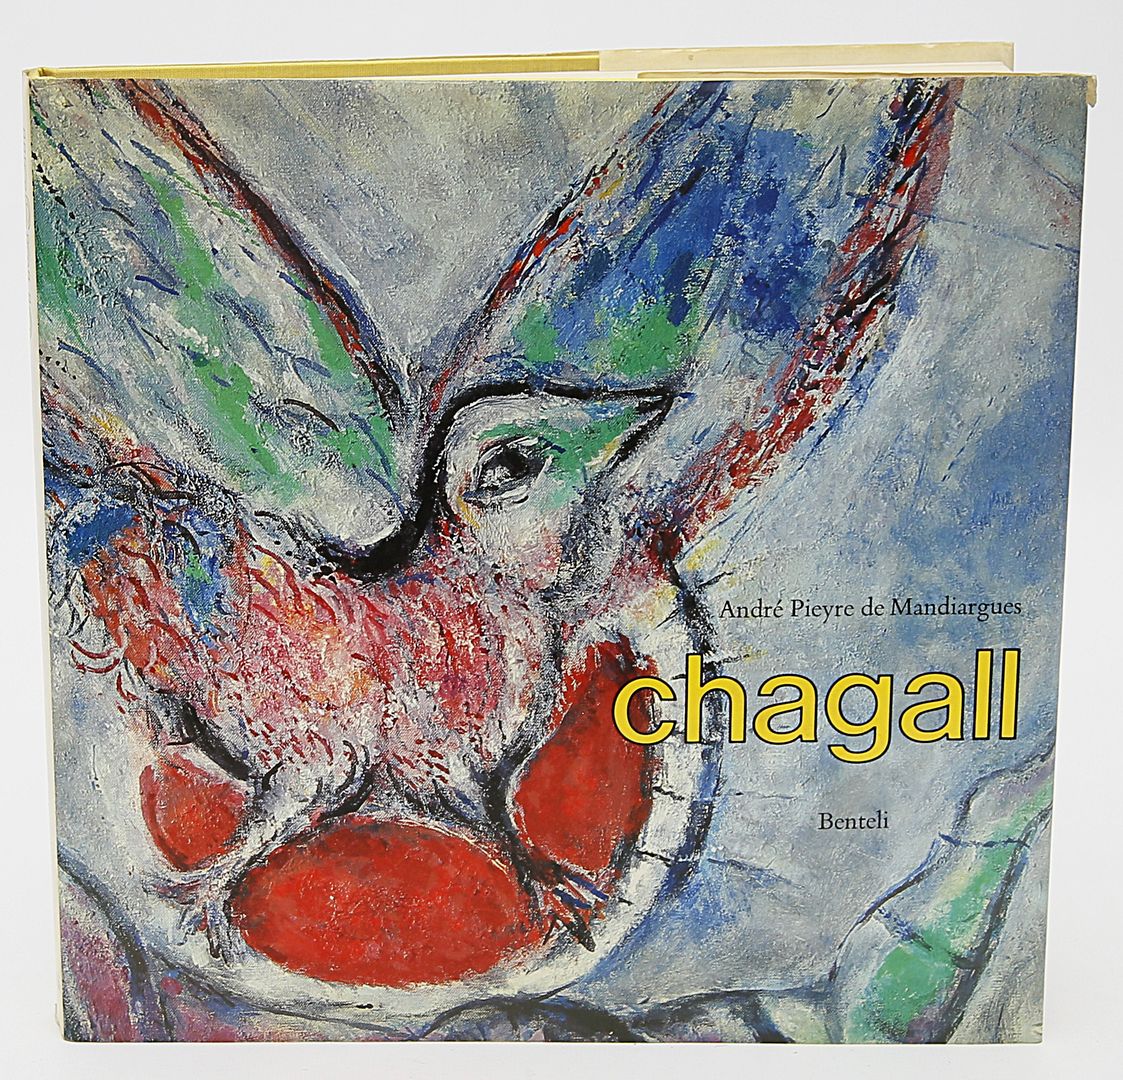 Buch "Chagall".